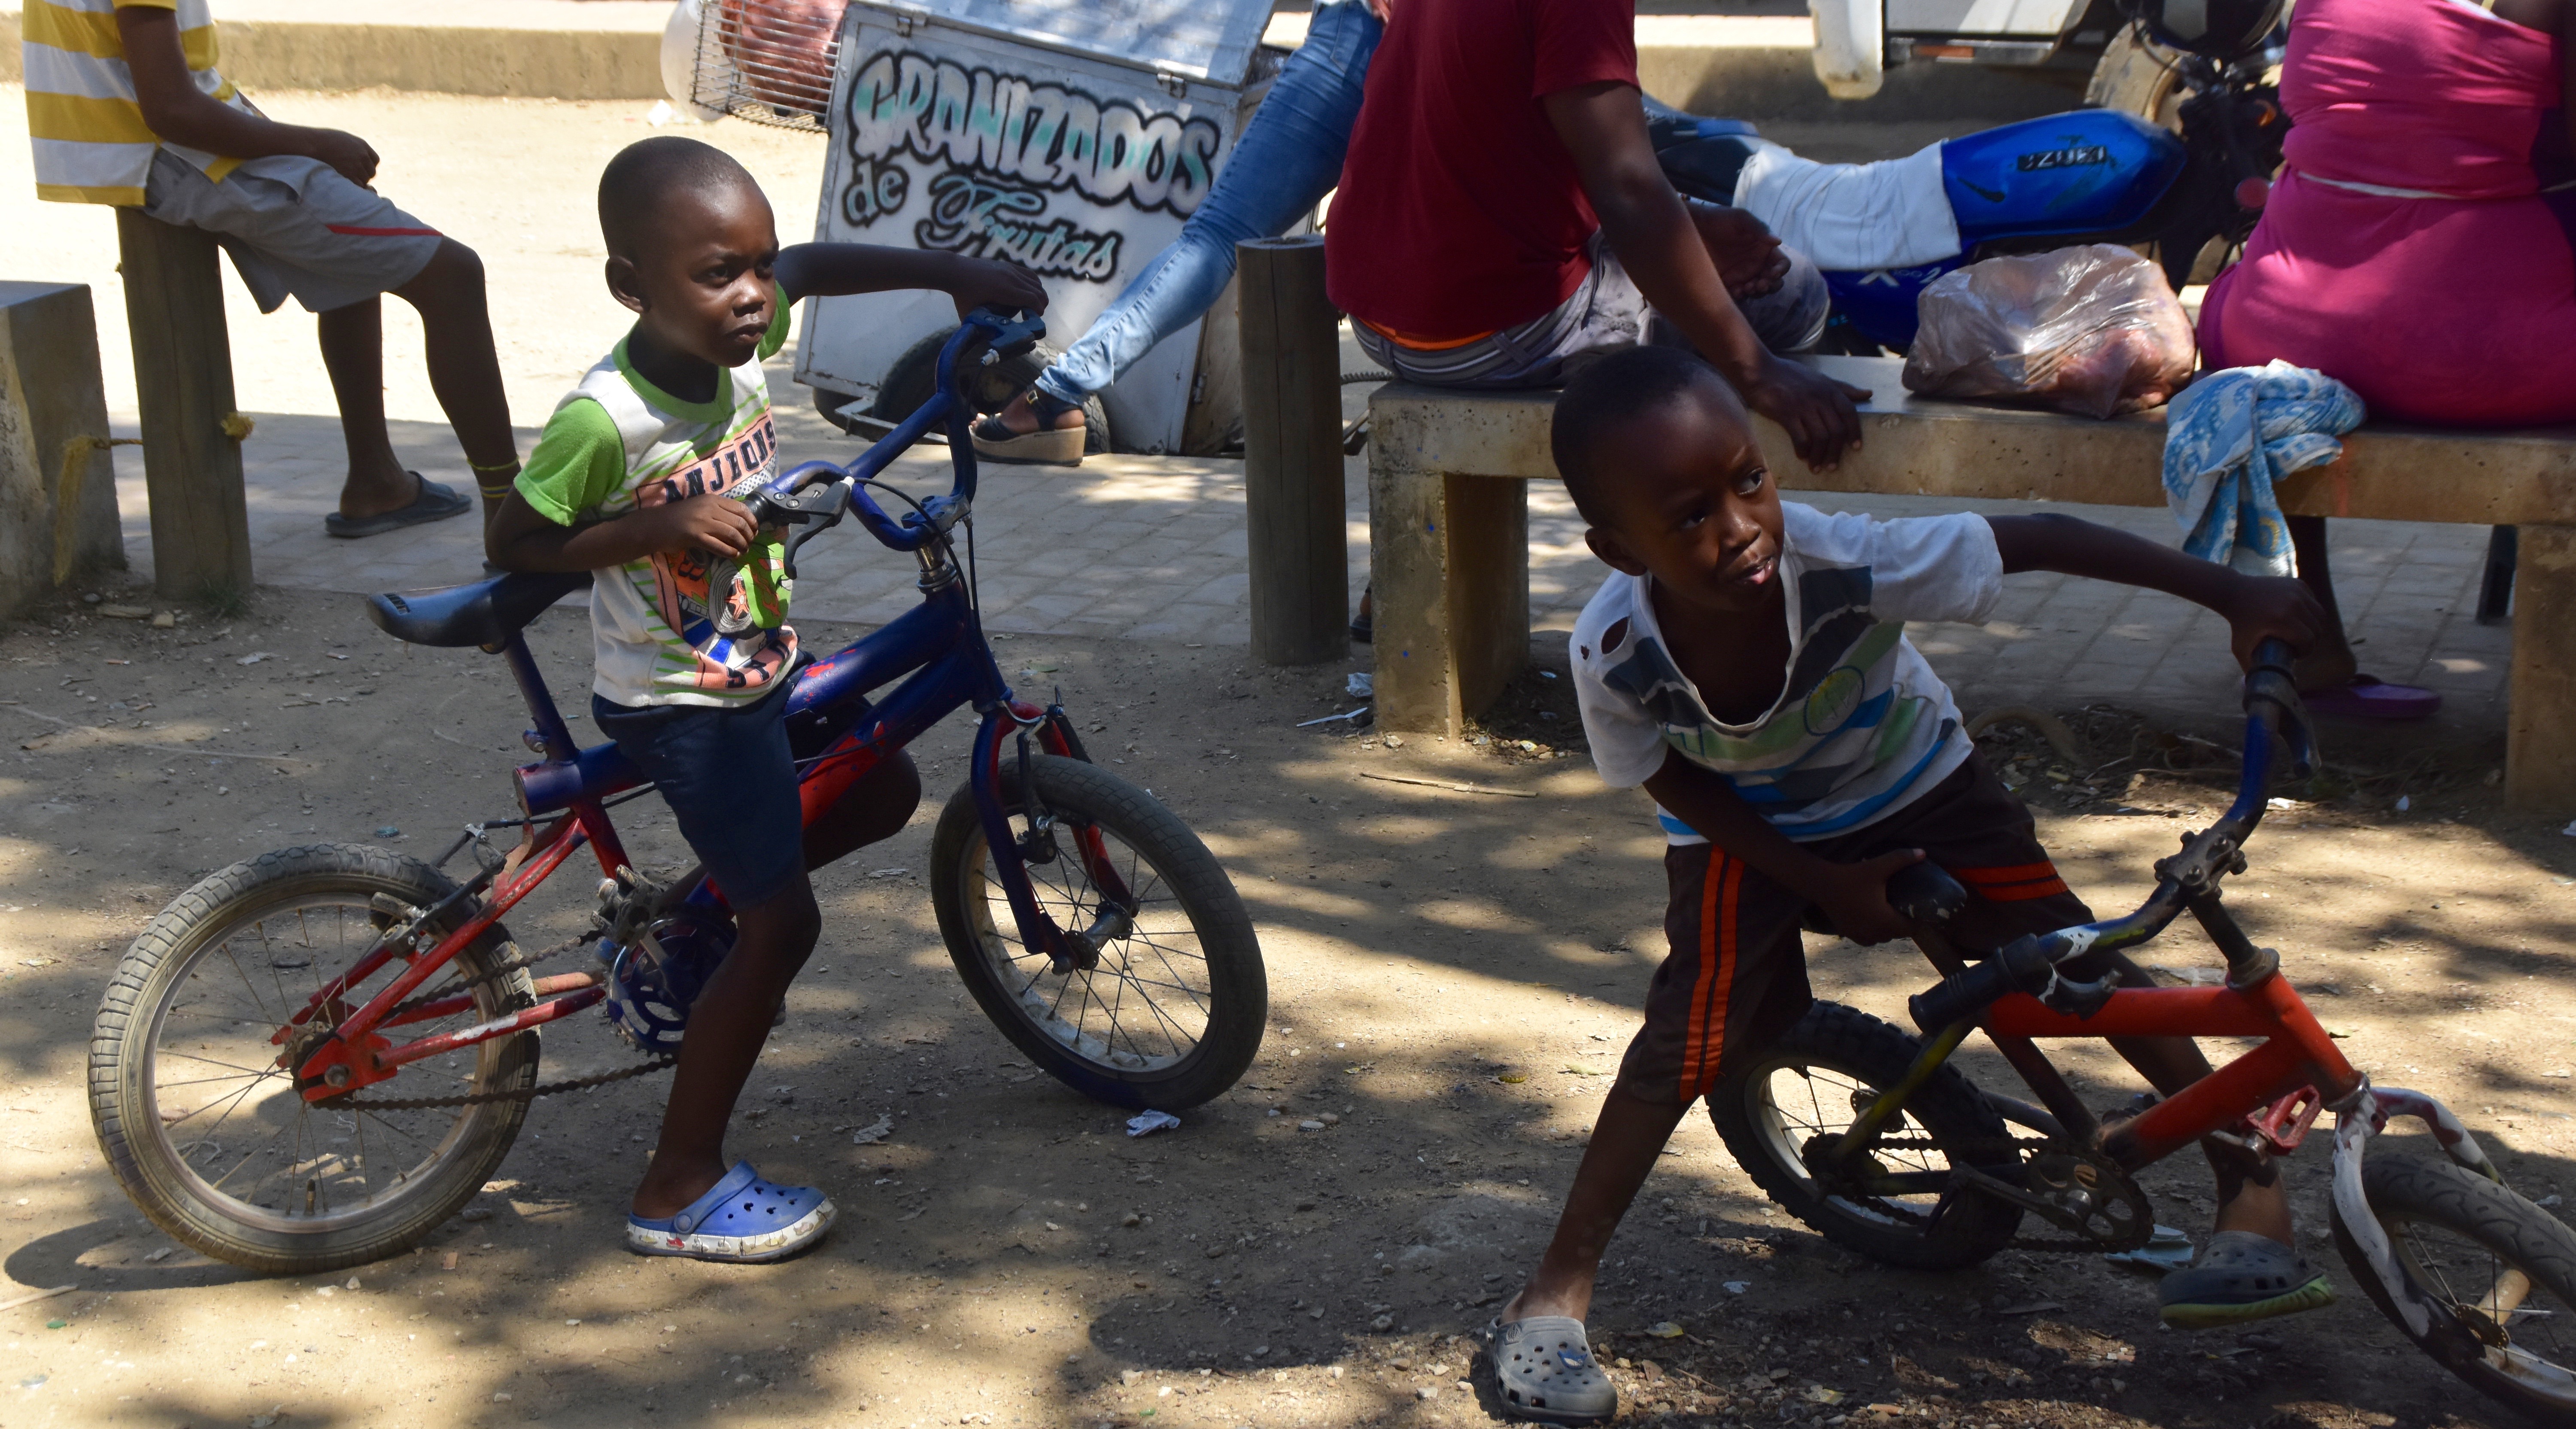 Boys on Bikes, Palenque de San Basilio